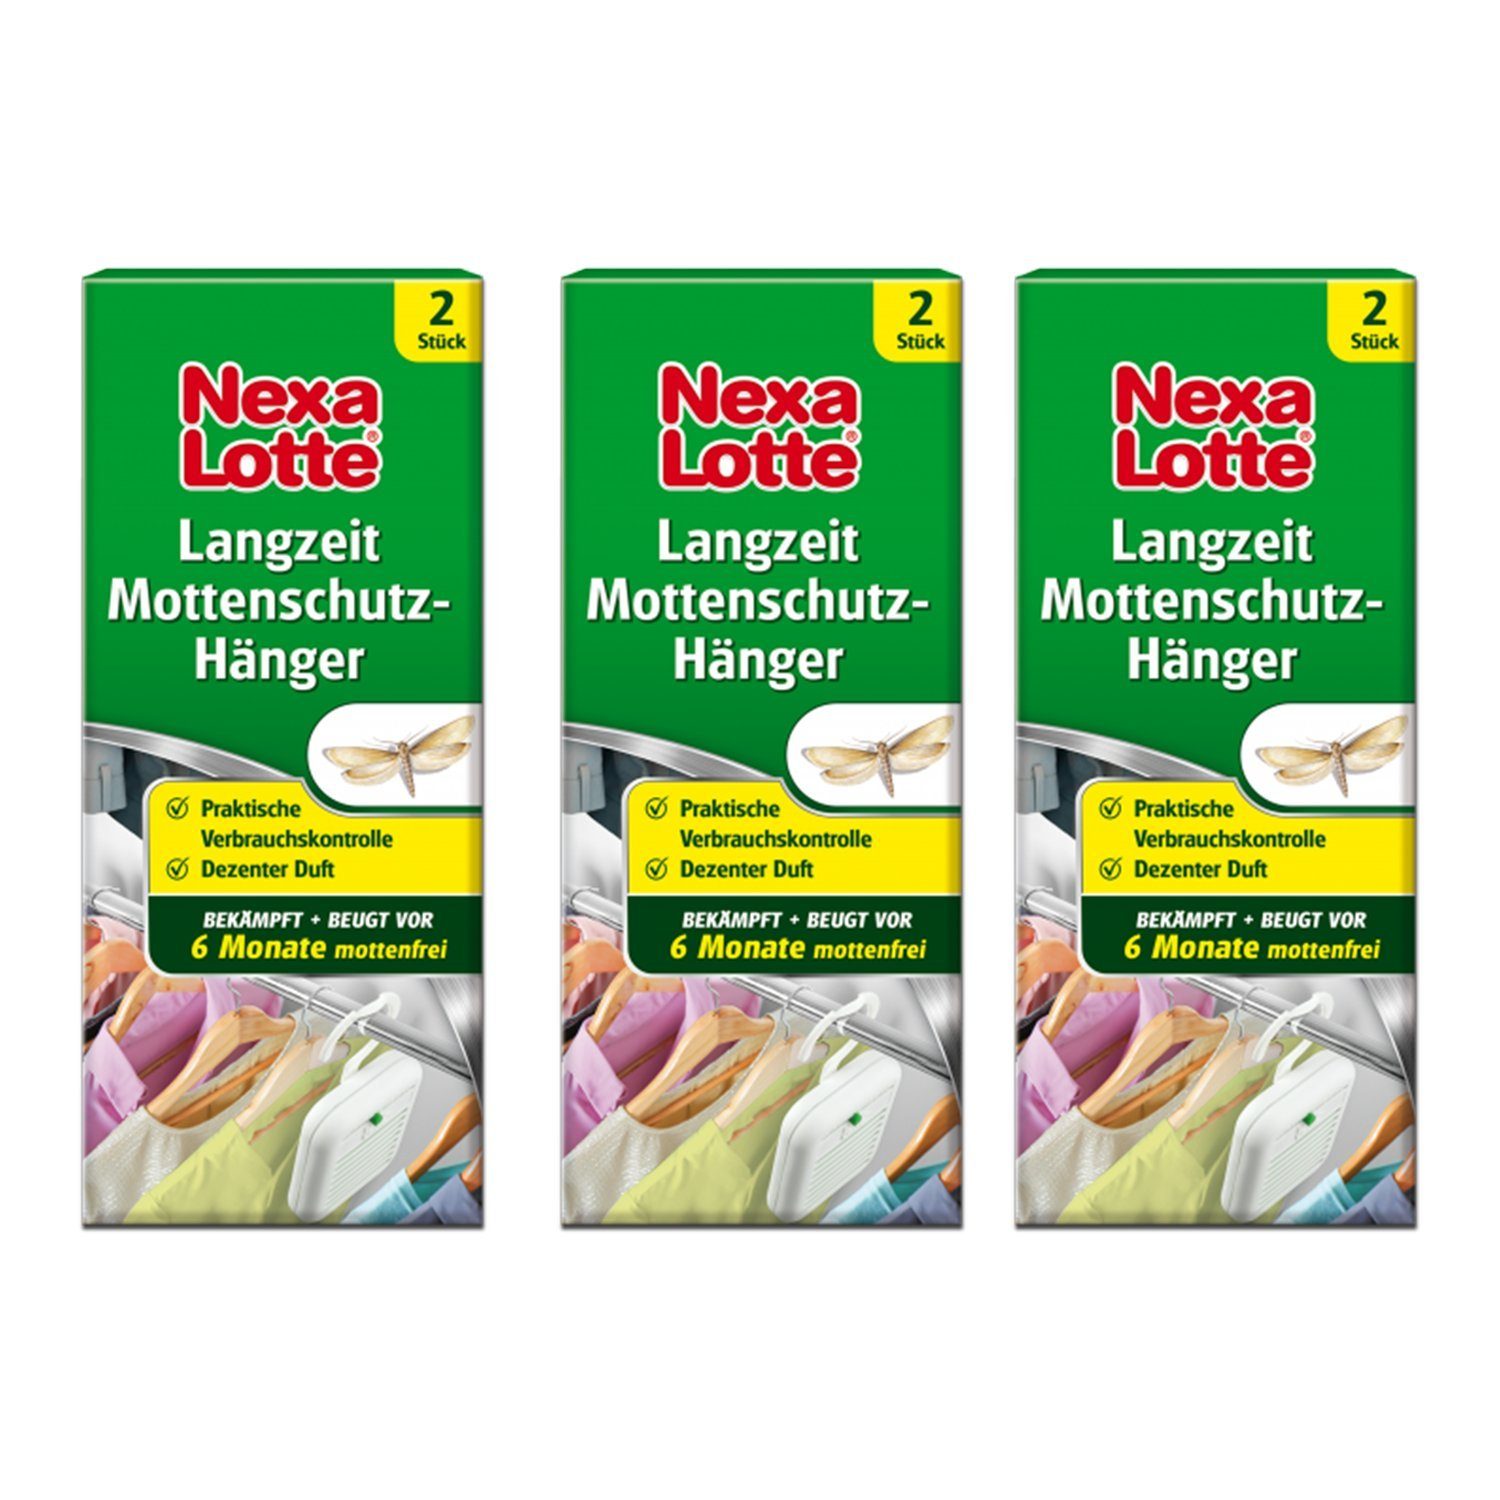 Nexa Lotte Insektenspray 3x Nexa Lotte Langzeit Mottenschutz je 2 Hänger gegen Kleidermotten wi